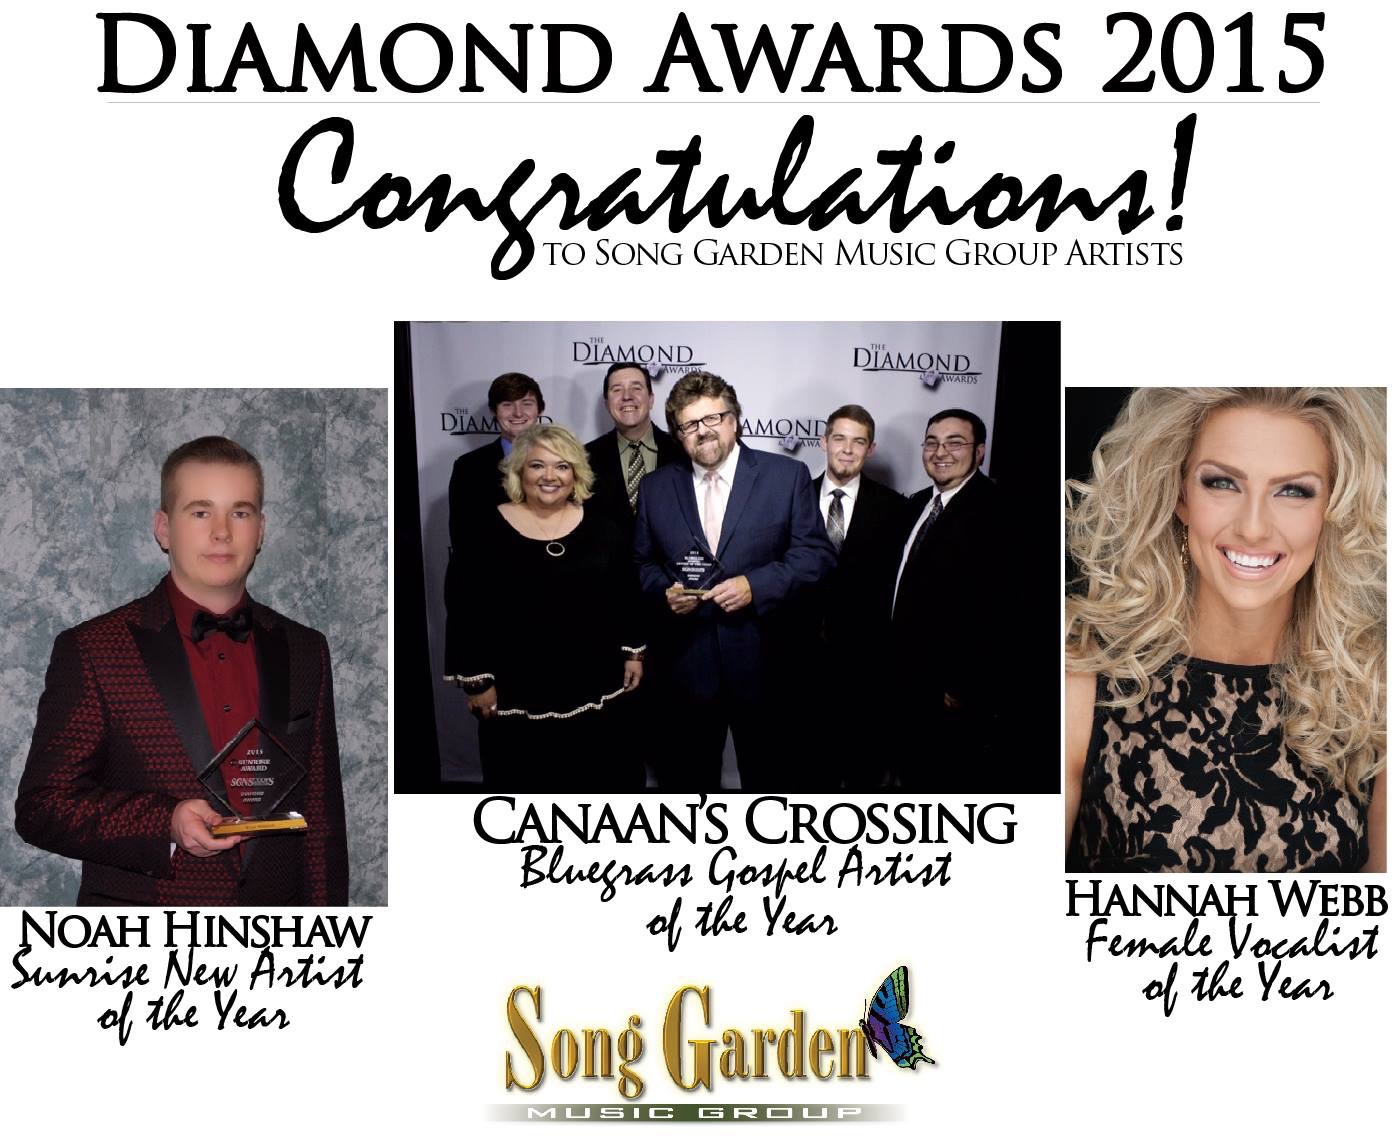 Song Garden Music Group Artists take home 2015 Diamond Awards